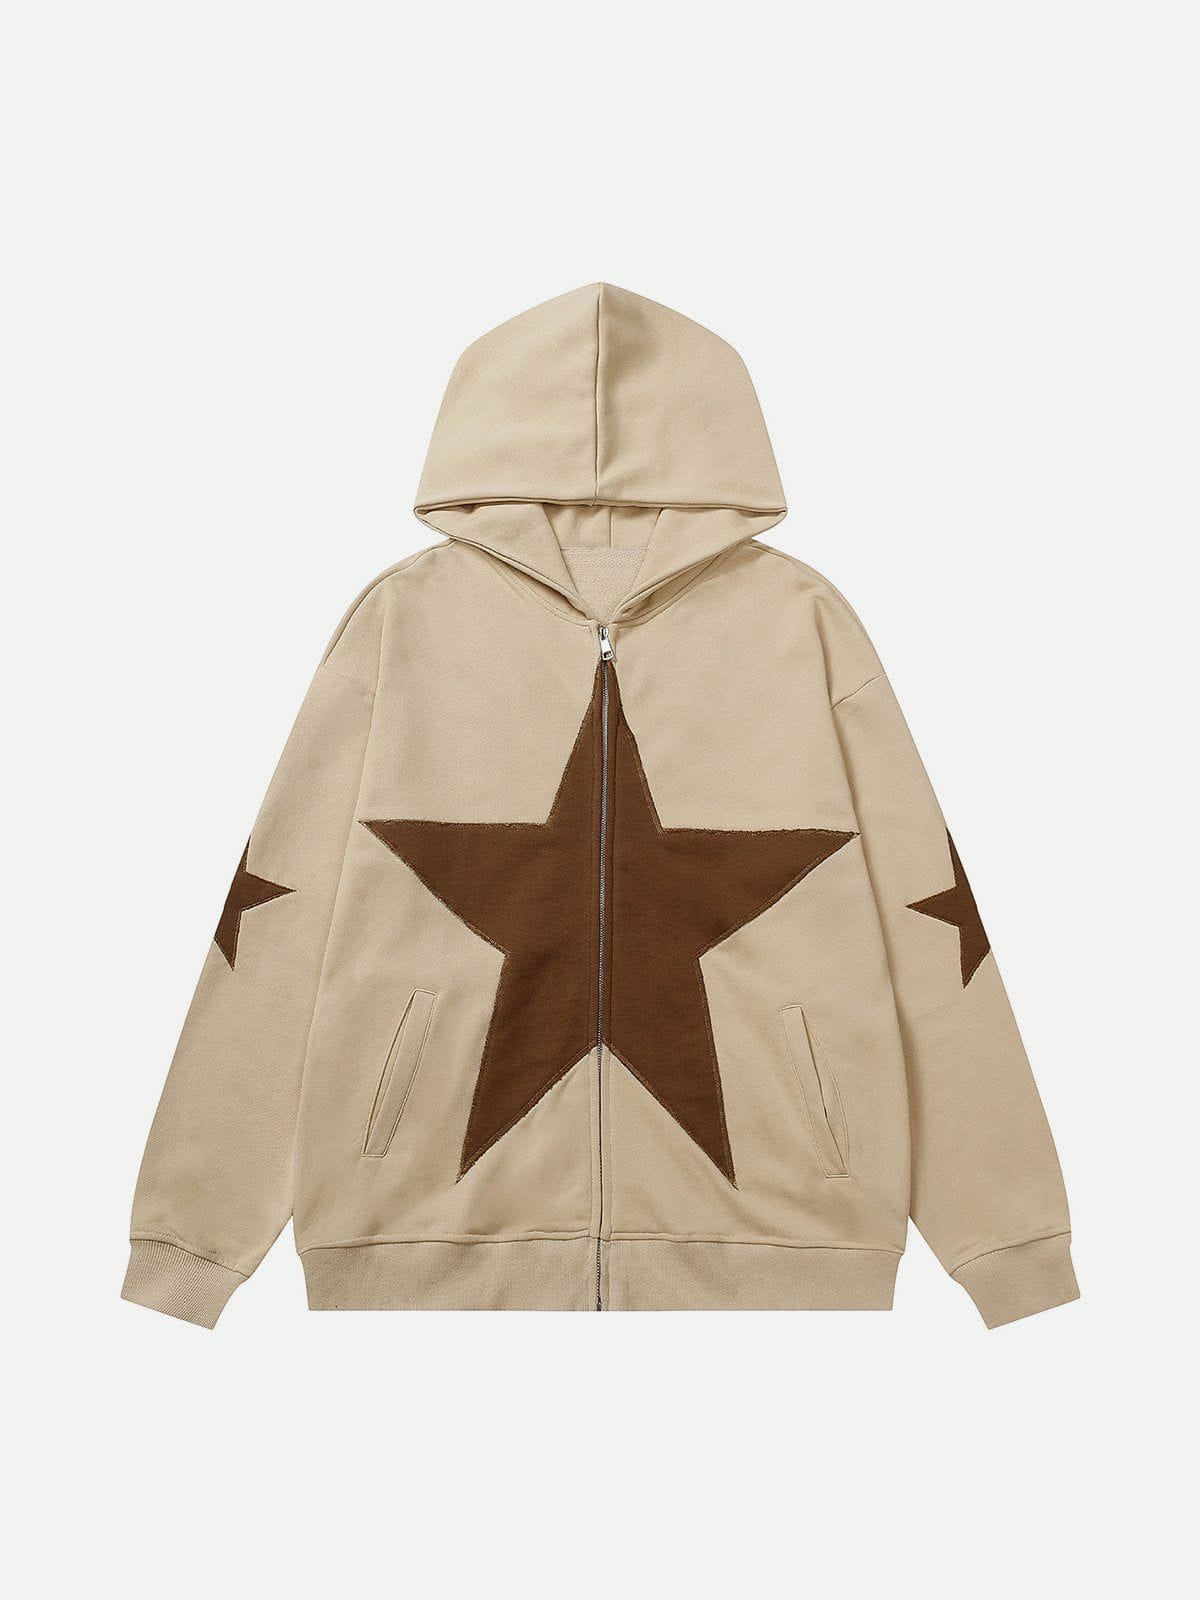 dynamic star graphic hoodie edgy streetwear 5192